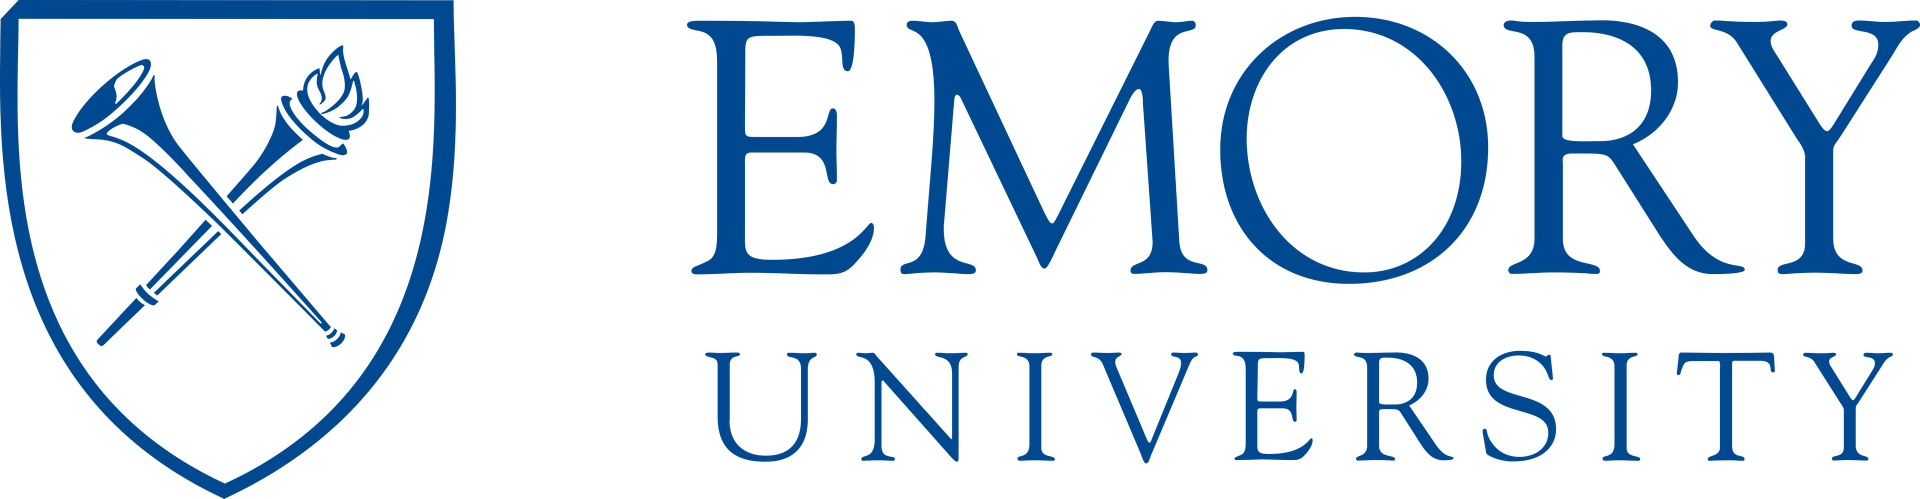 Emory_University_Logo.png